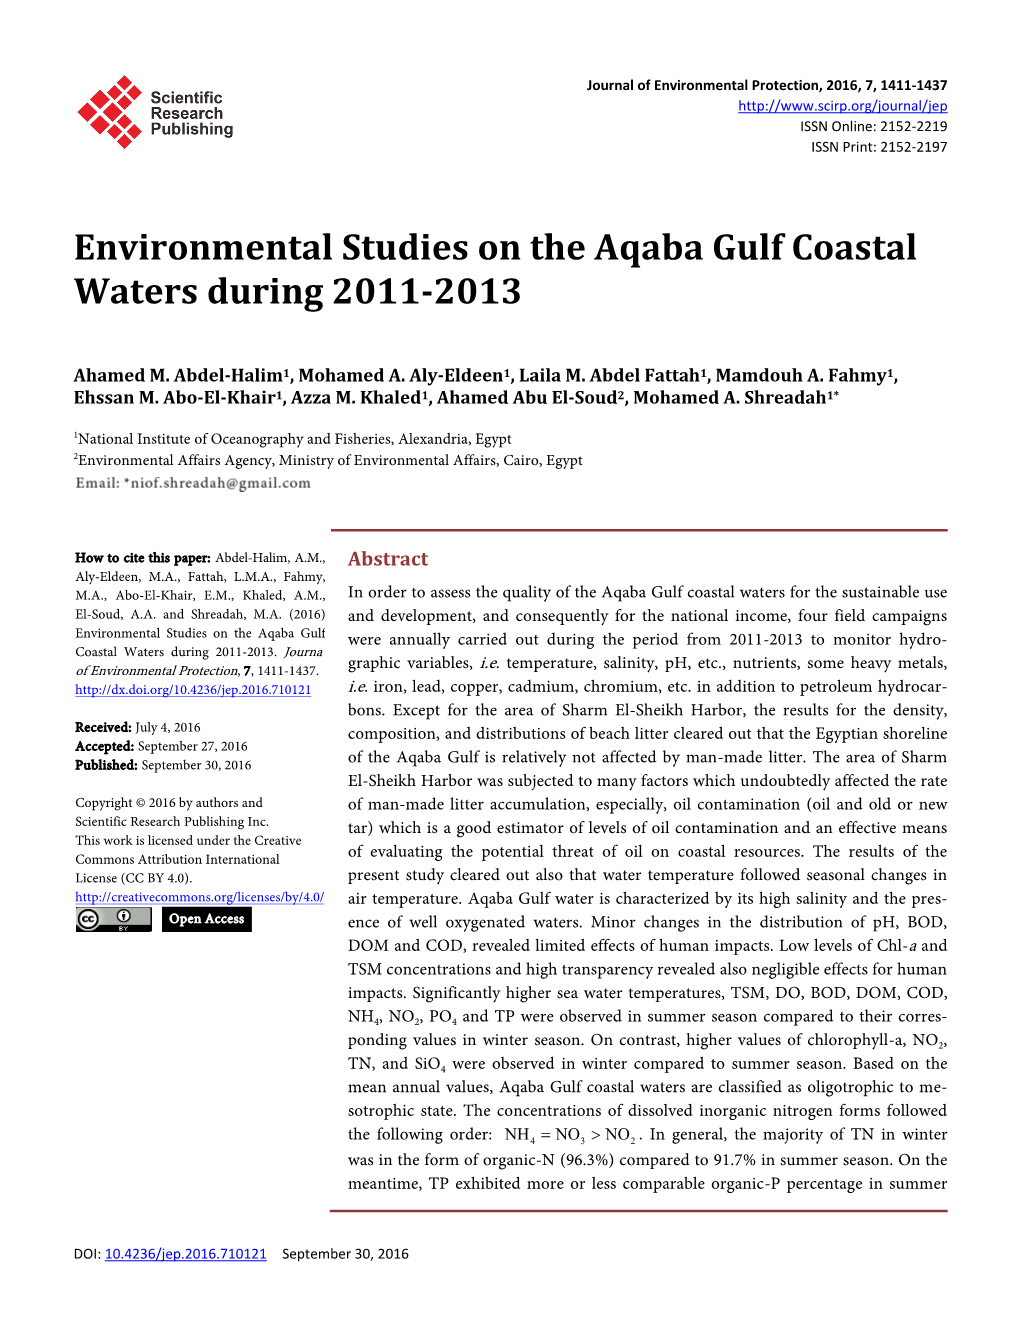 Environmental Studies on the Aqaba Gulf Coastal Waters During 2011-2013